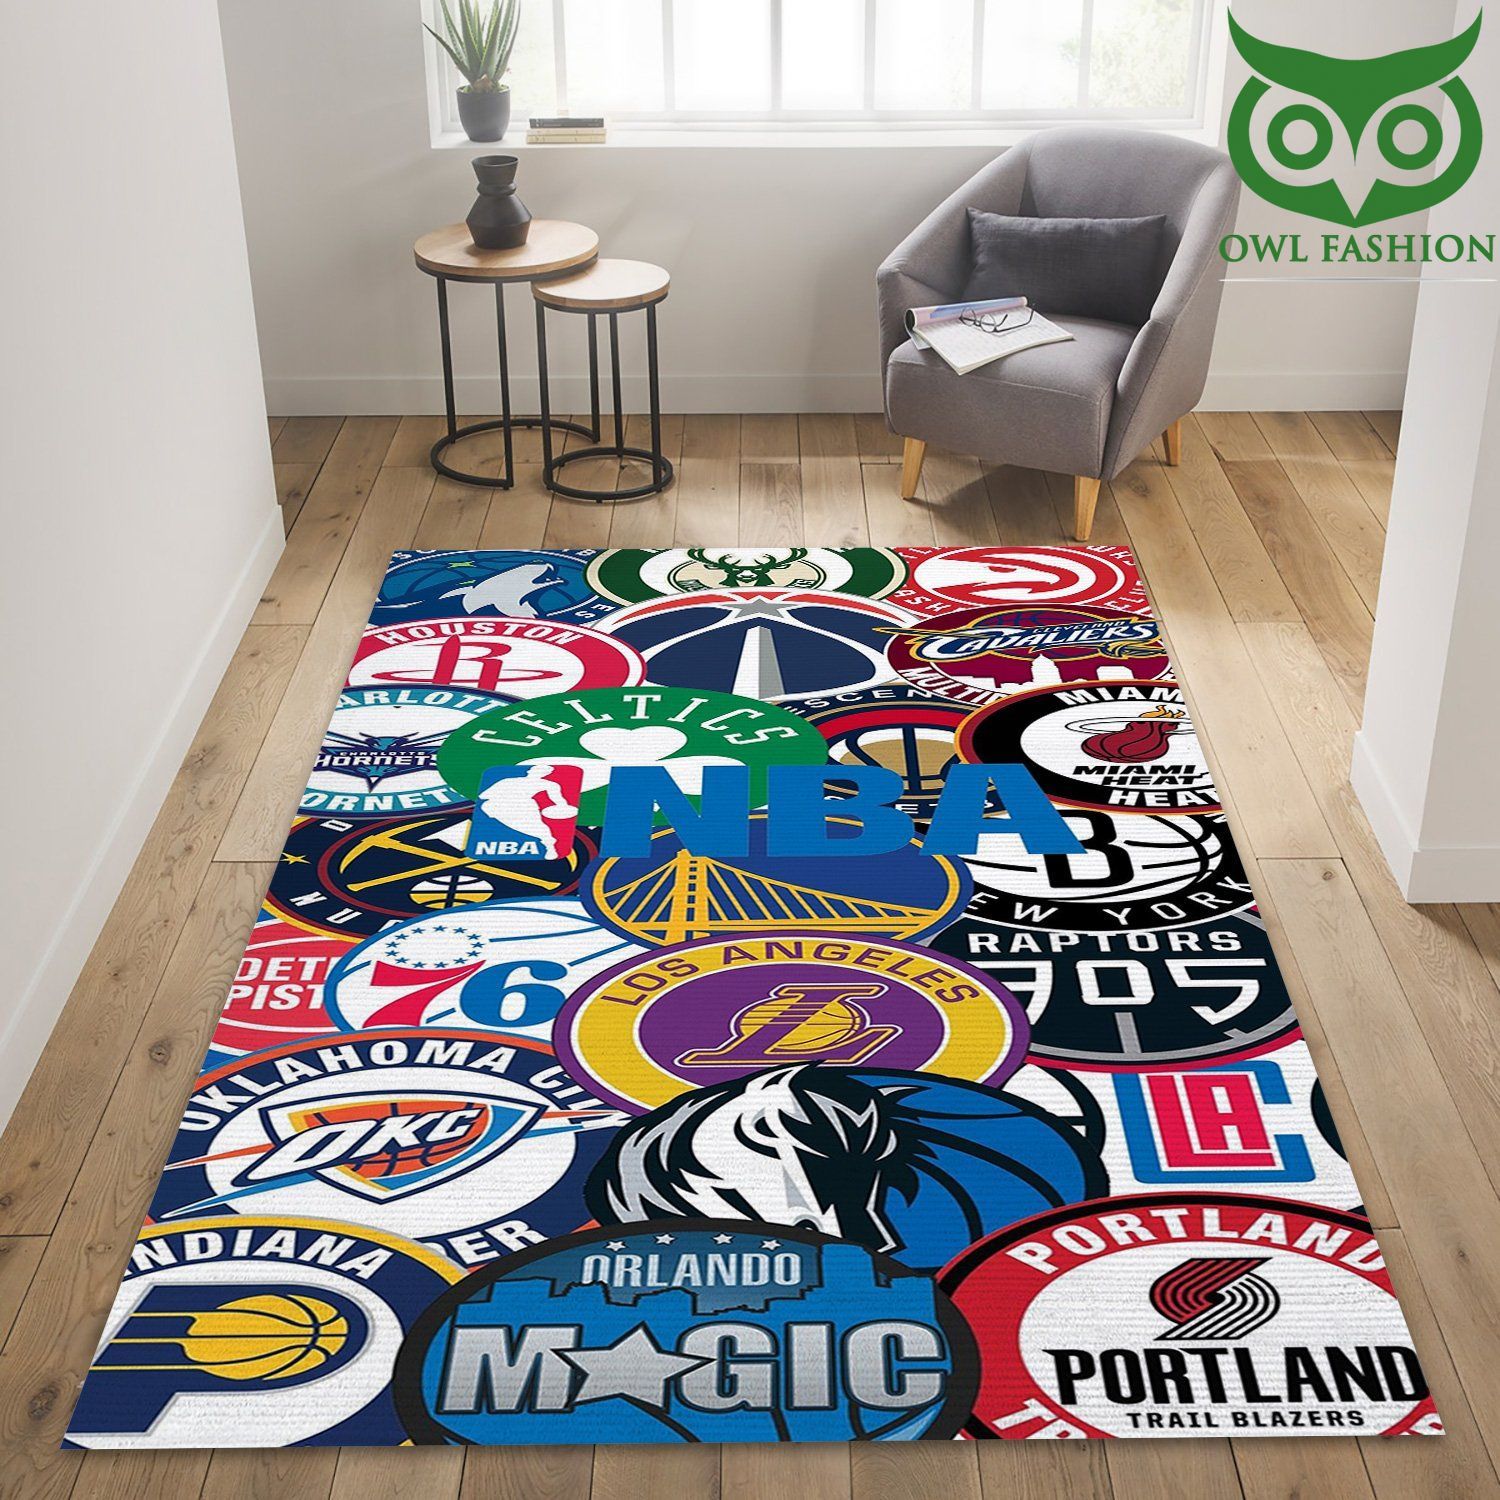 Portland Trail Blazers Nba Basketball carpet rug